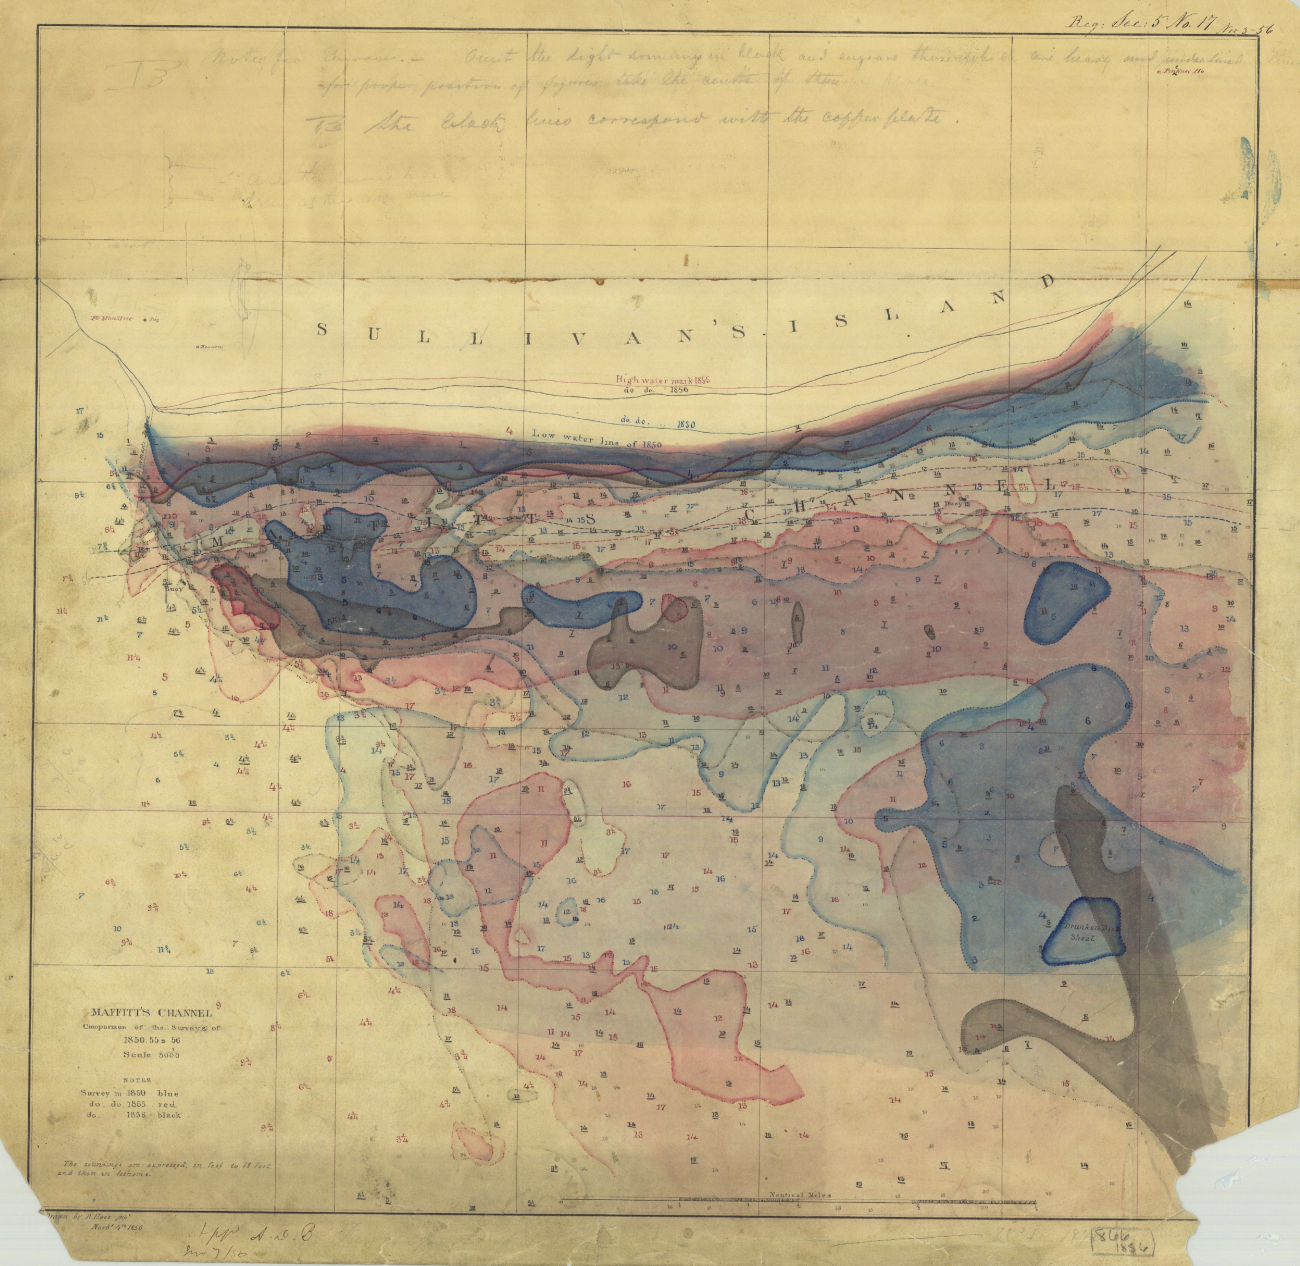 Mapping of changes in Maffitt's Channel, Sullivan's Island, Charleston Harbor